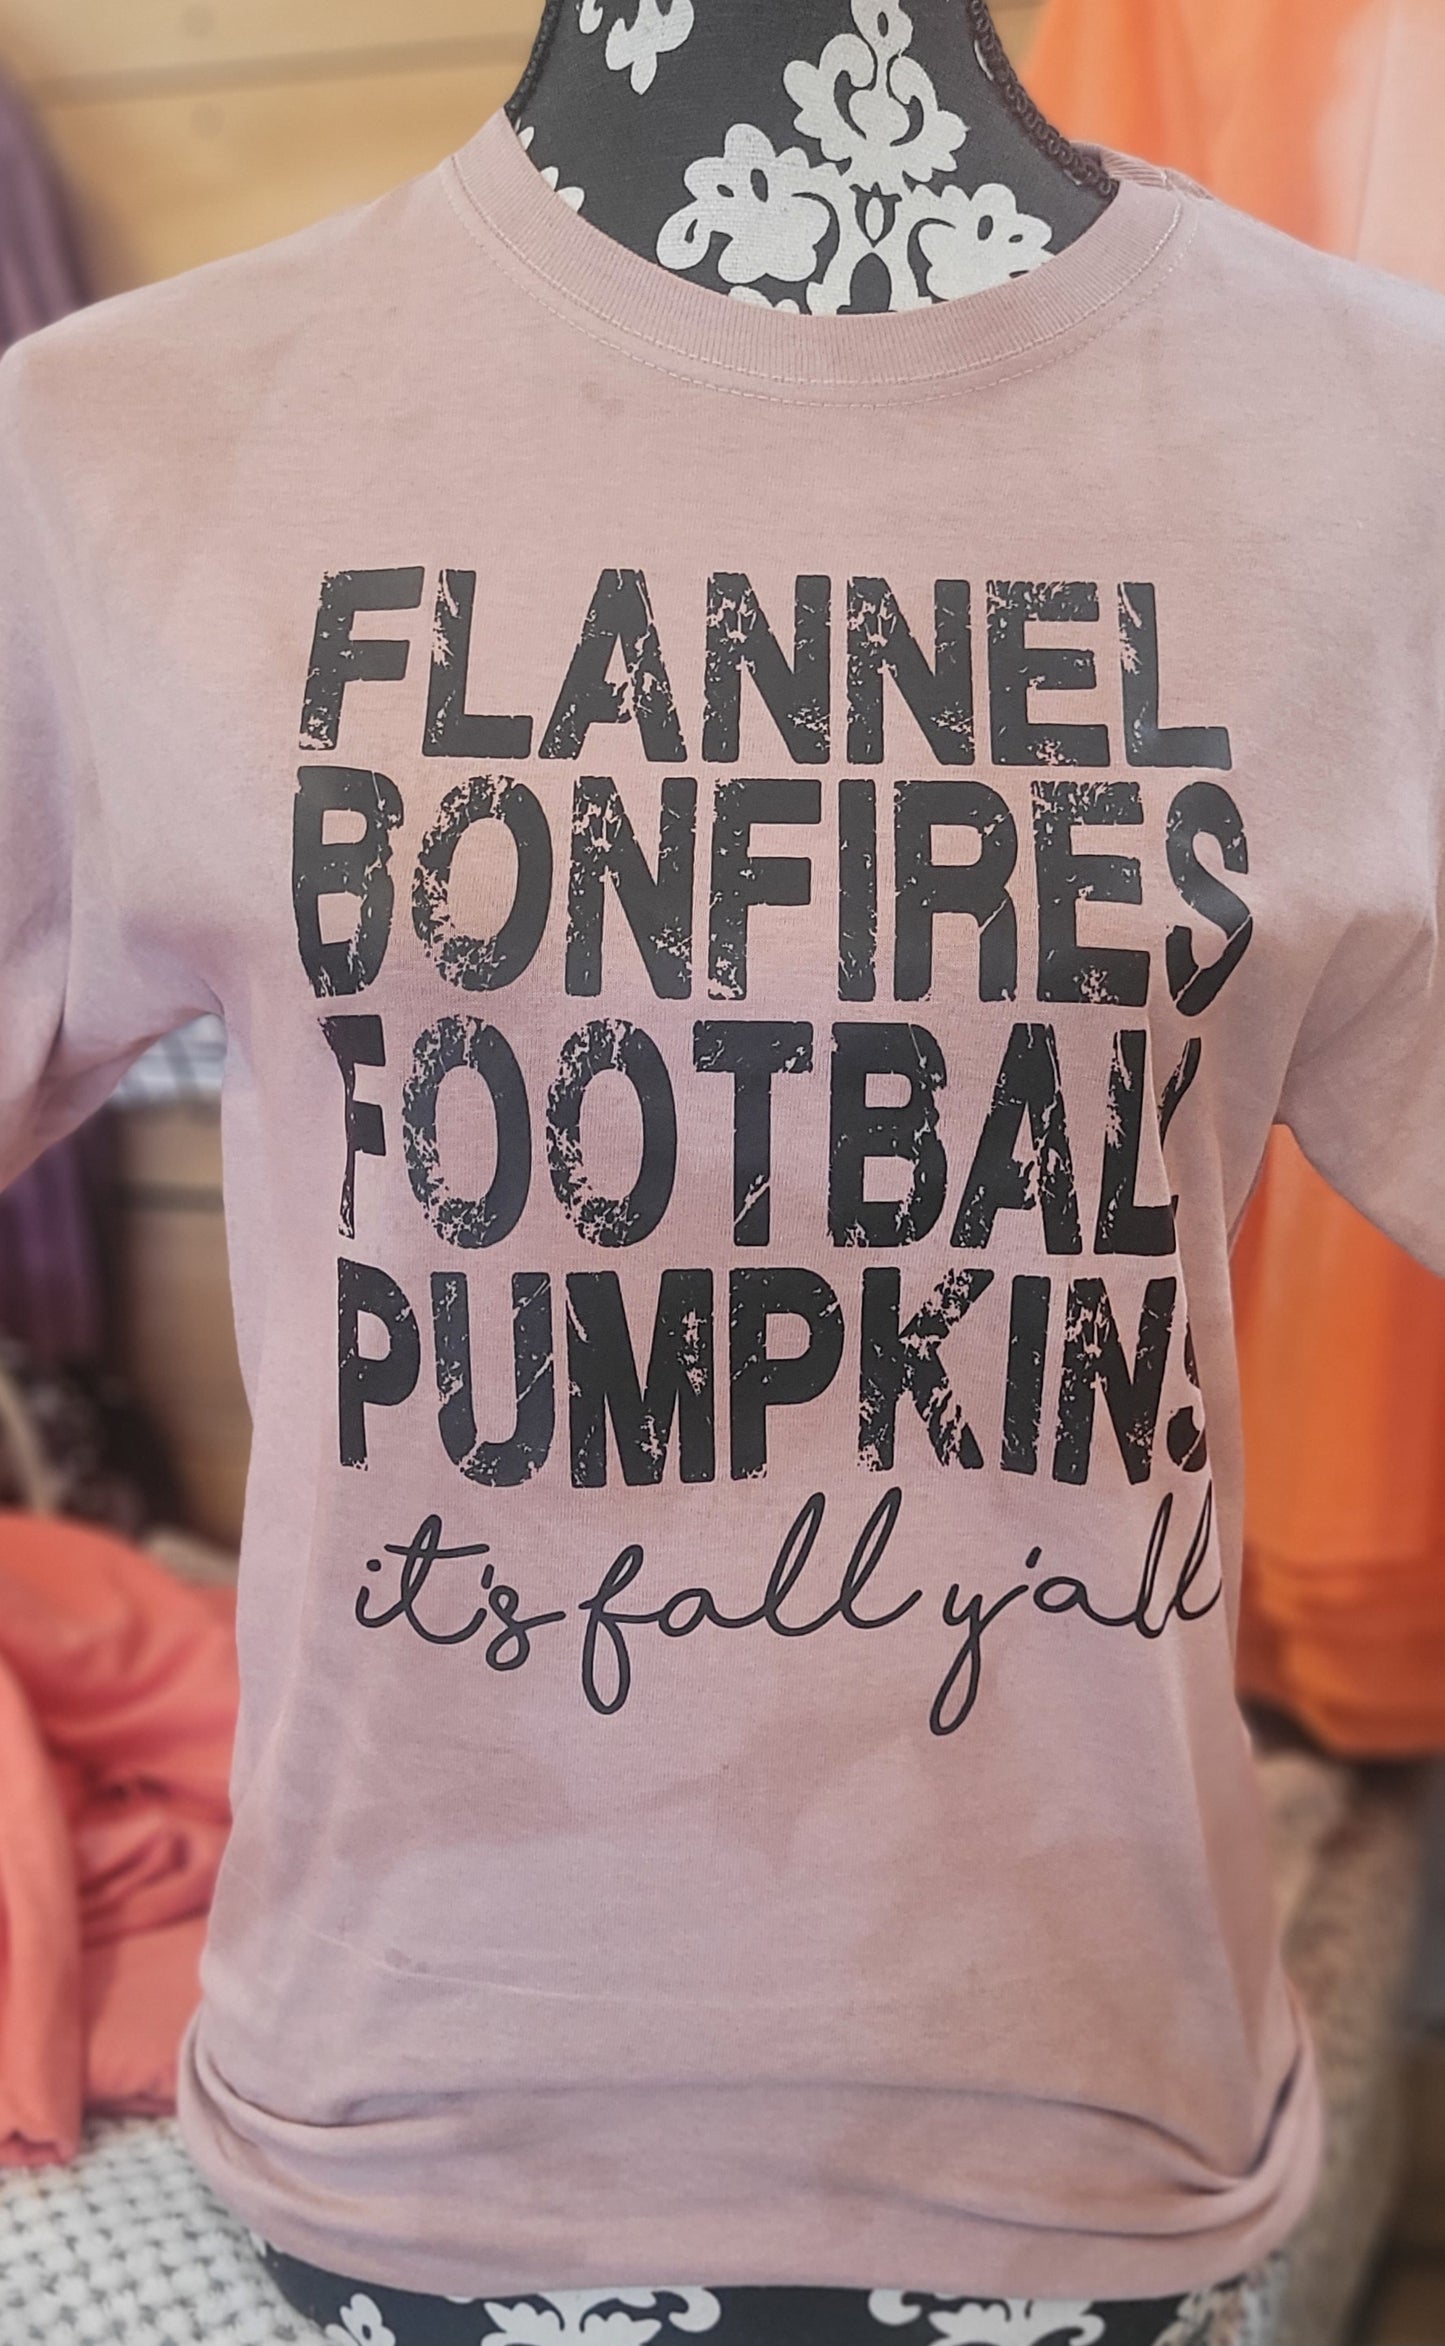 Flannel bonfires football tie dye tshirt